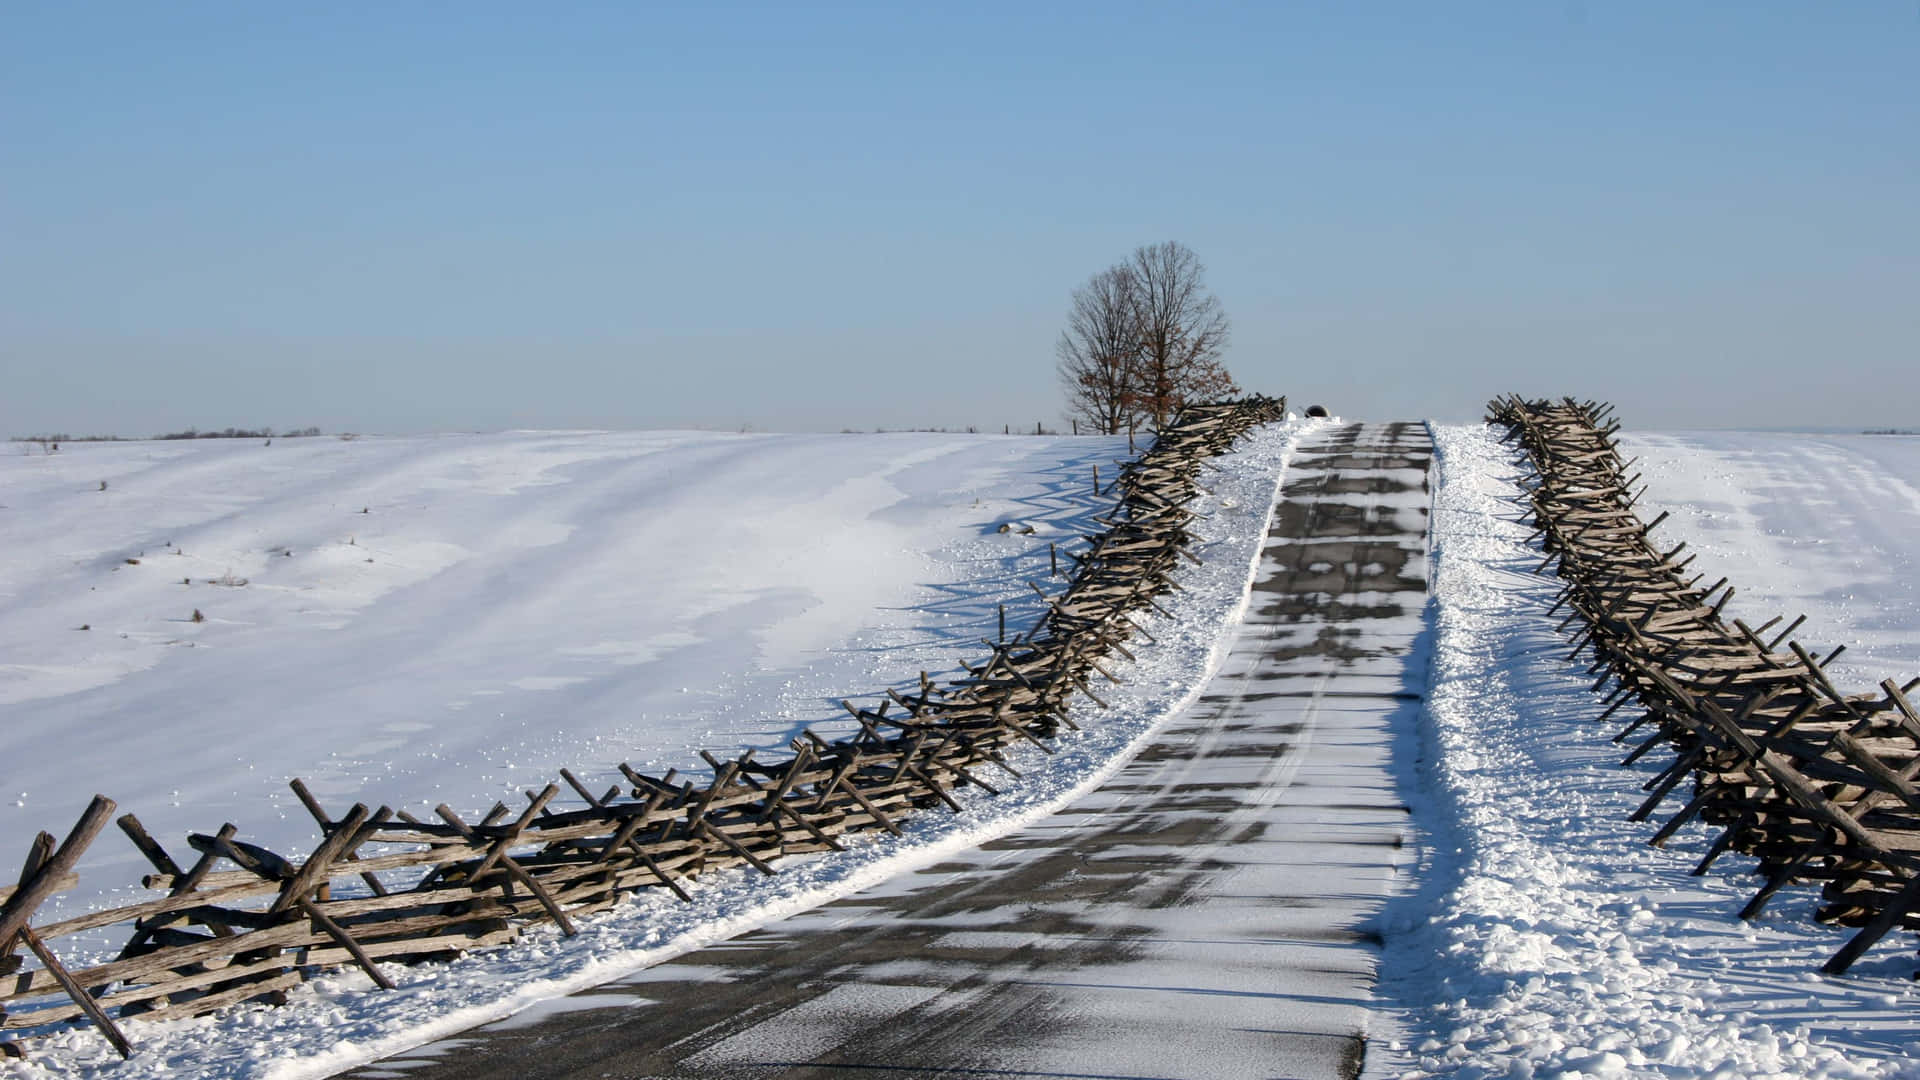 A tranquil snowy road through a serene winter landscape Wallpaper